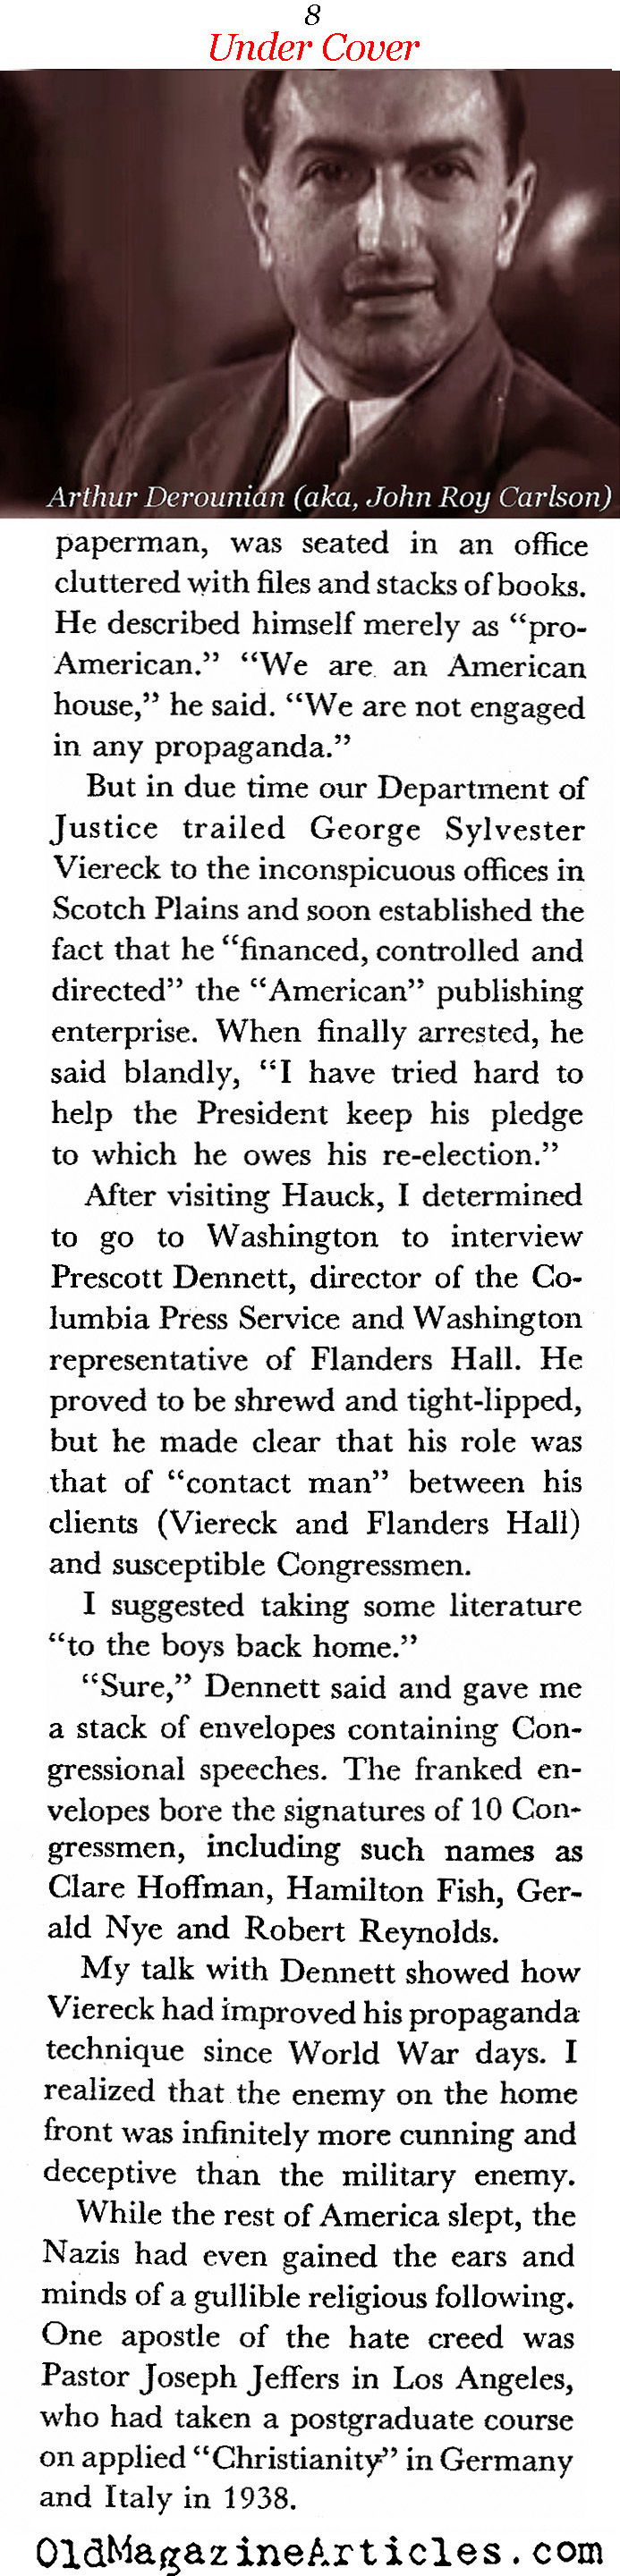 American Fascists Exposed (Coronet Magazine, 1944)